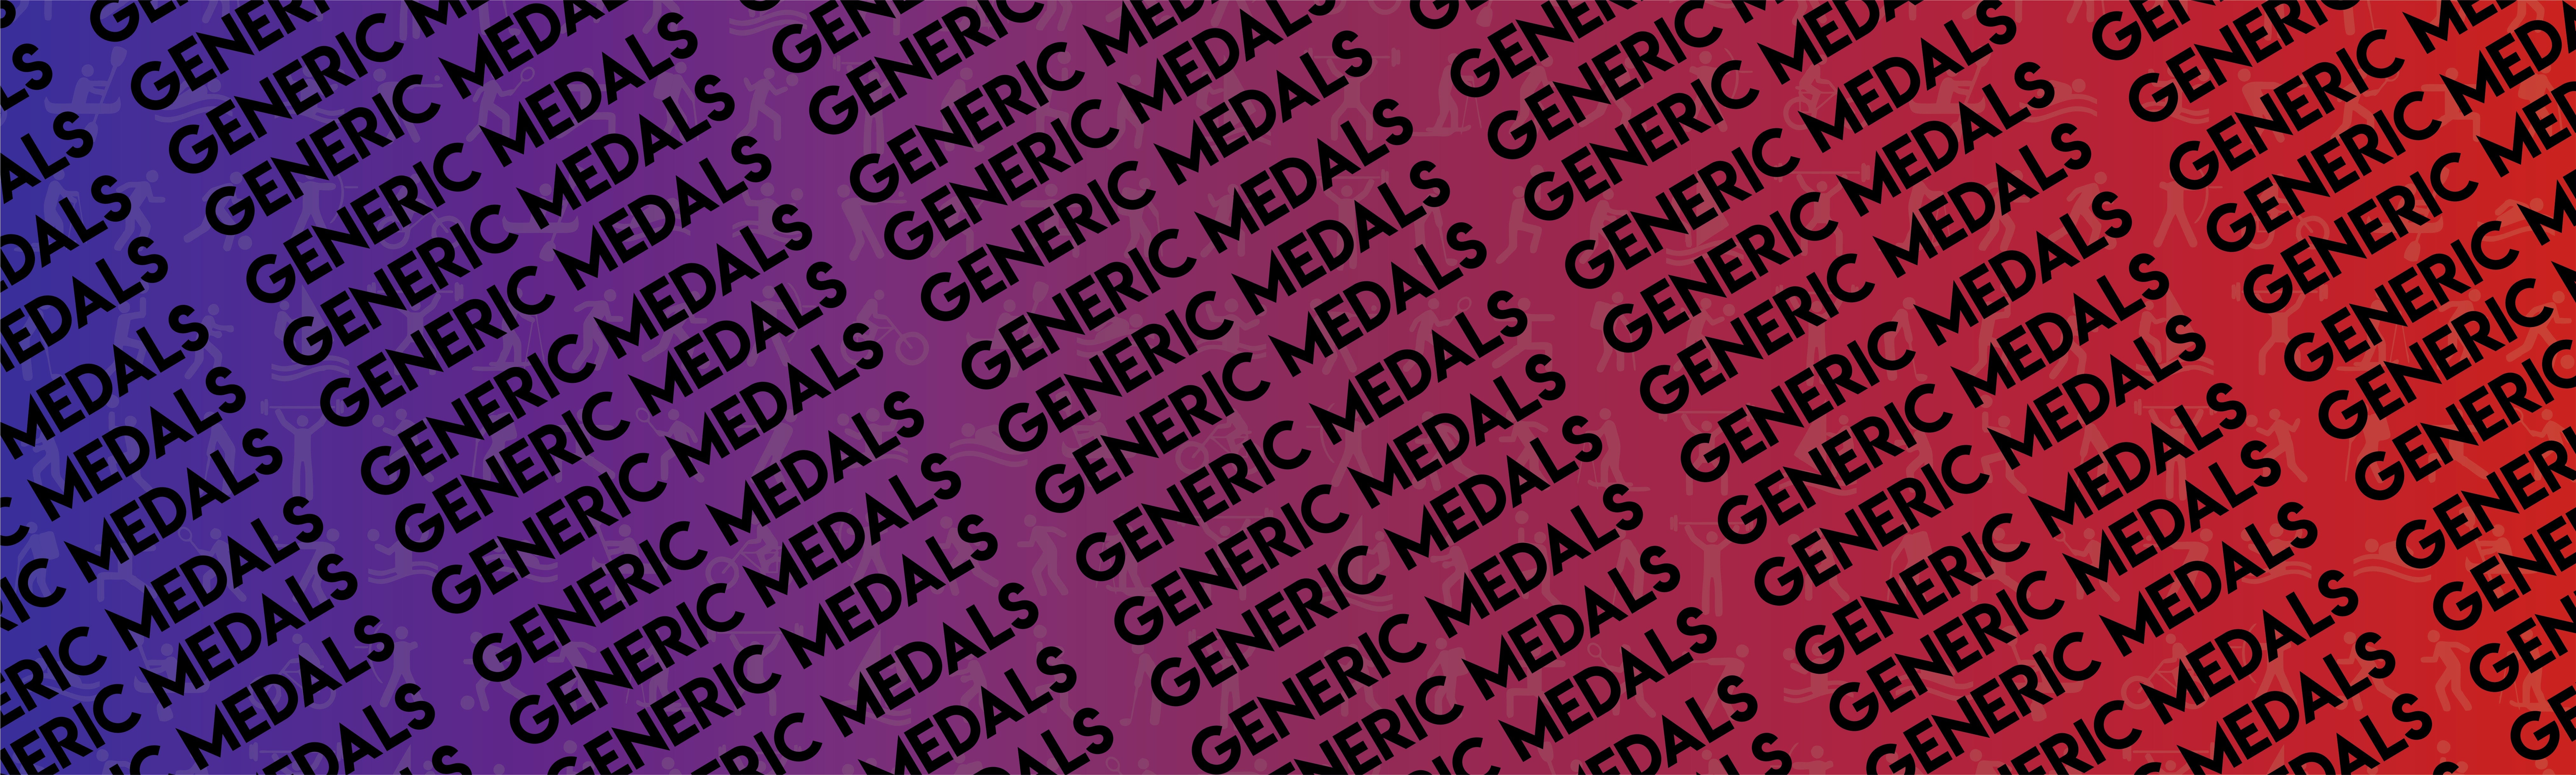 Generic Medals